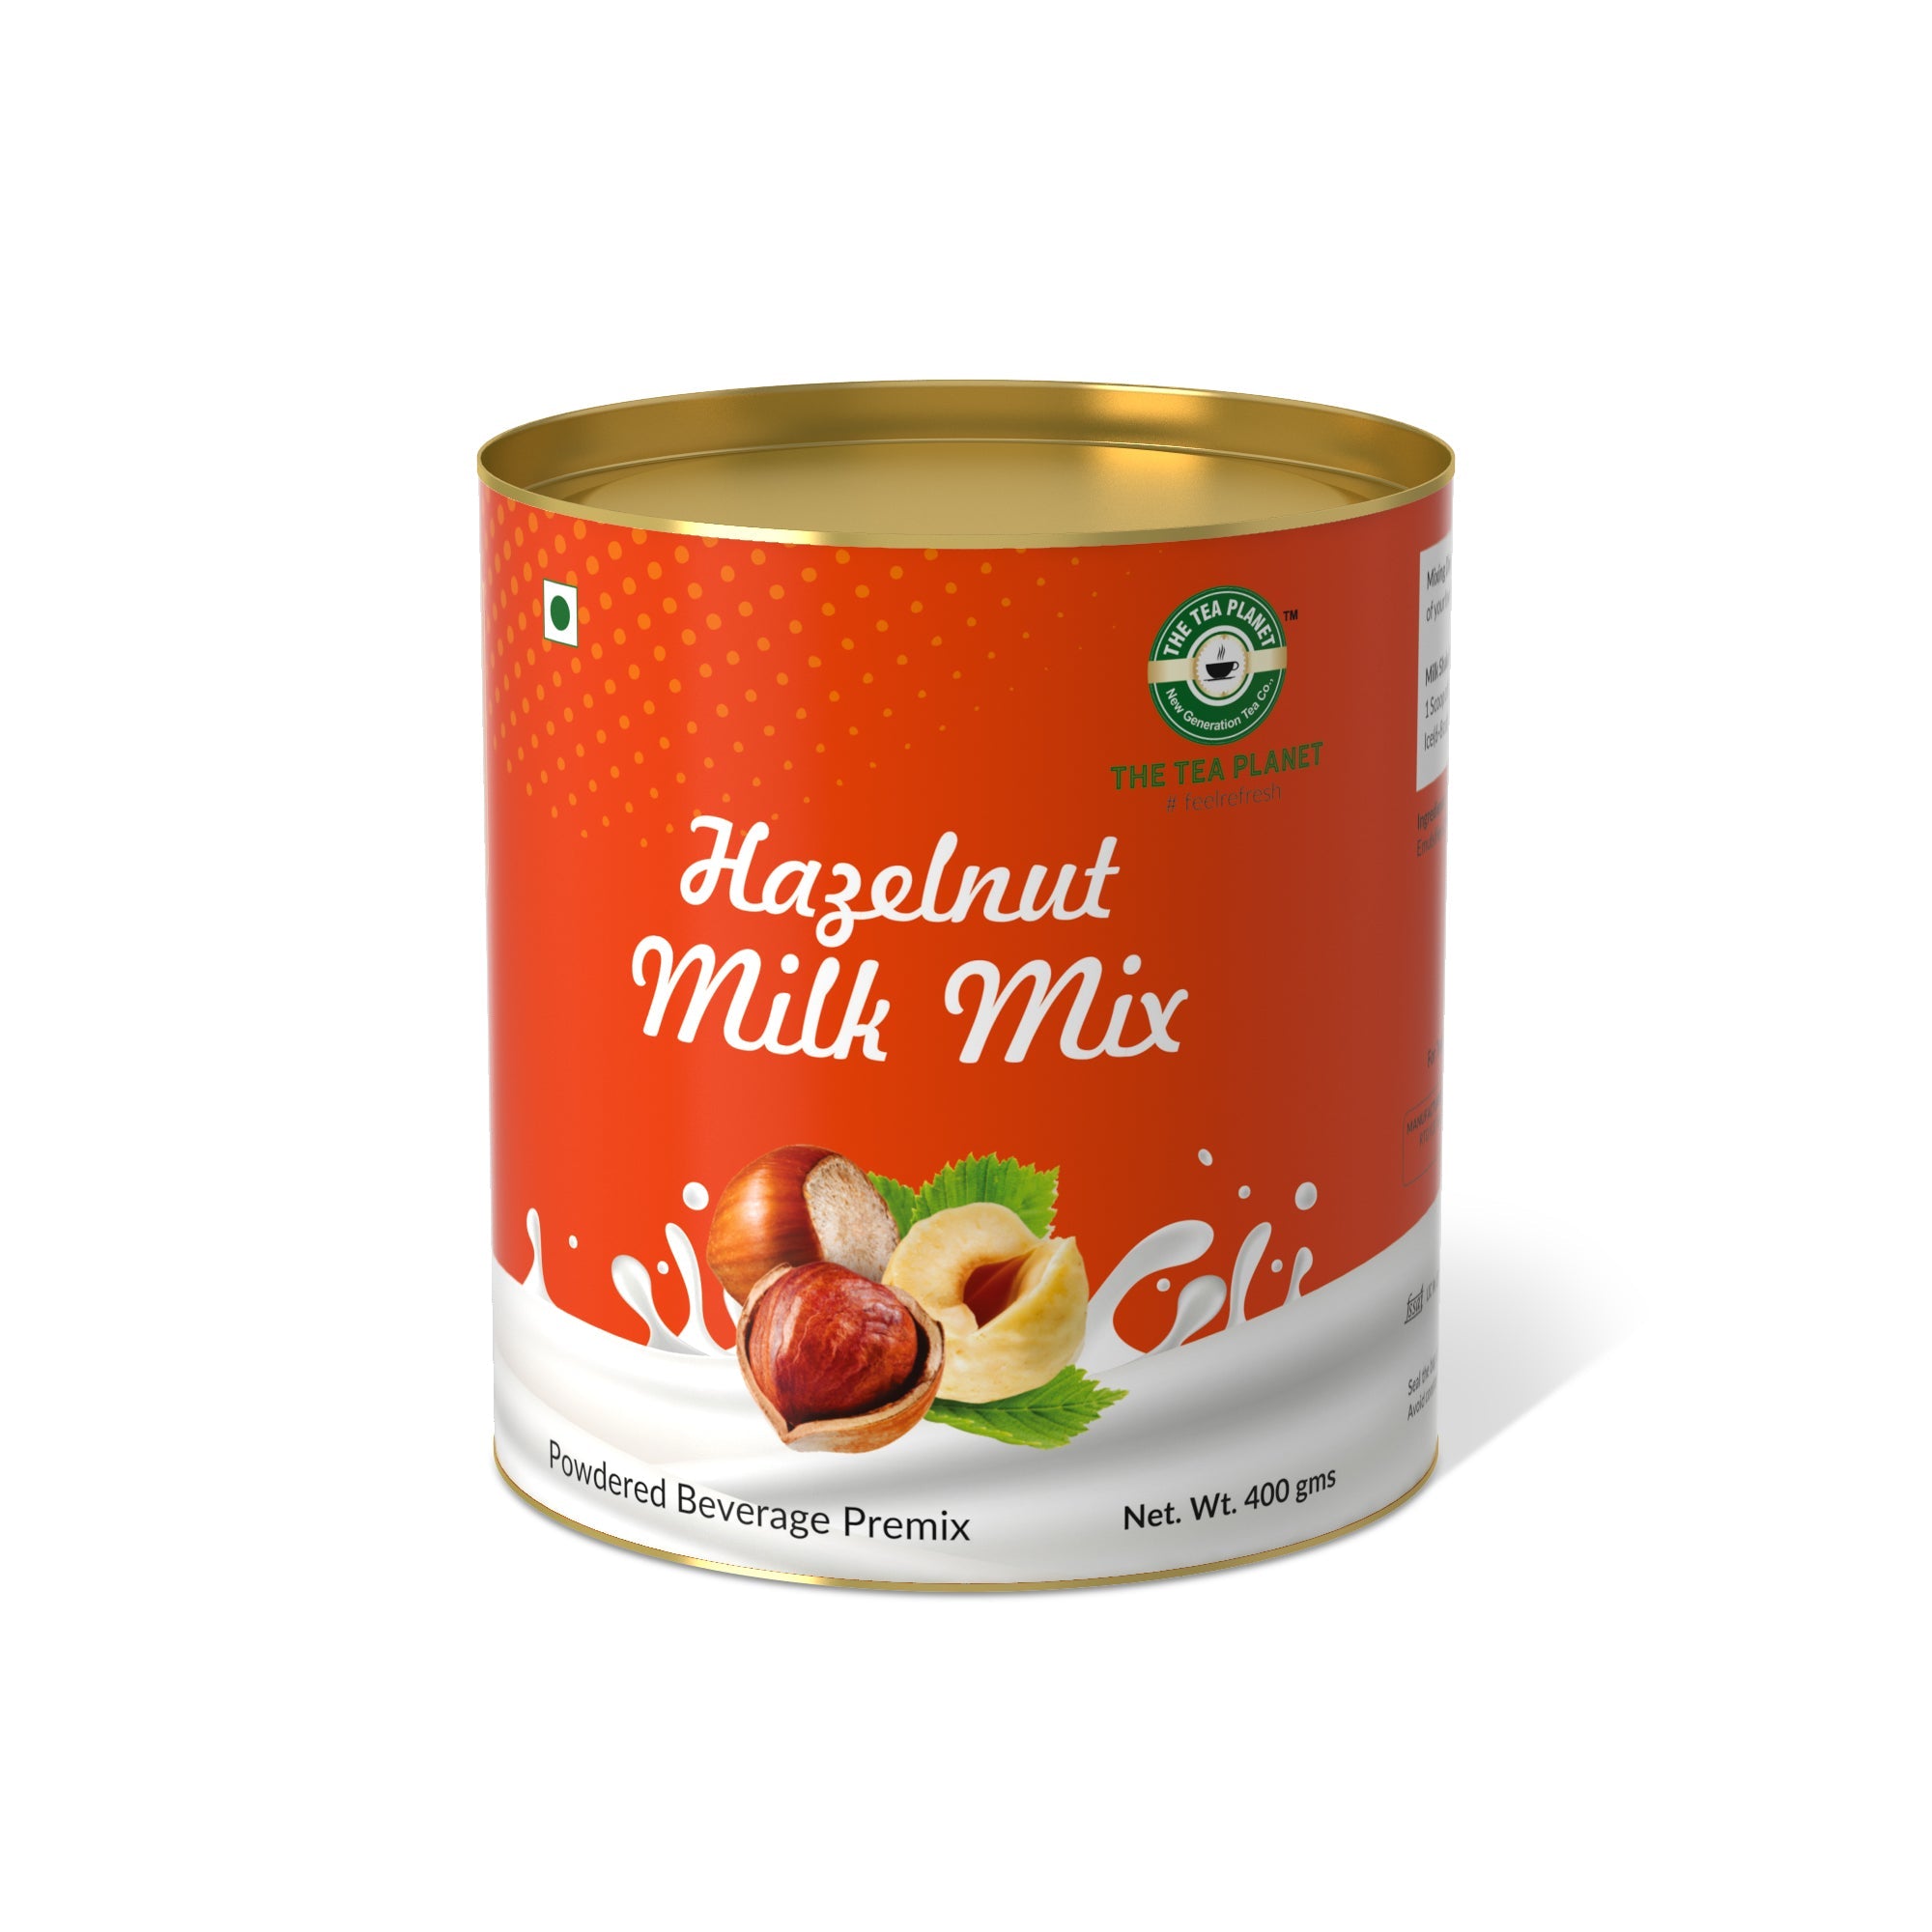 Hazelnut Flavor Milk Mix